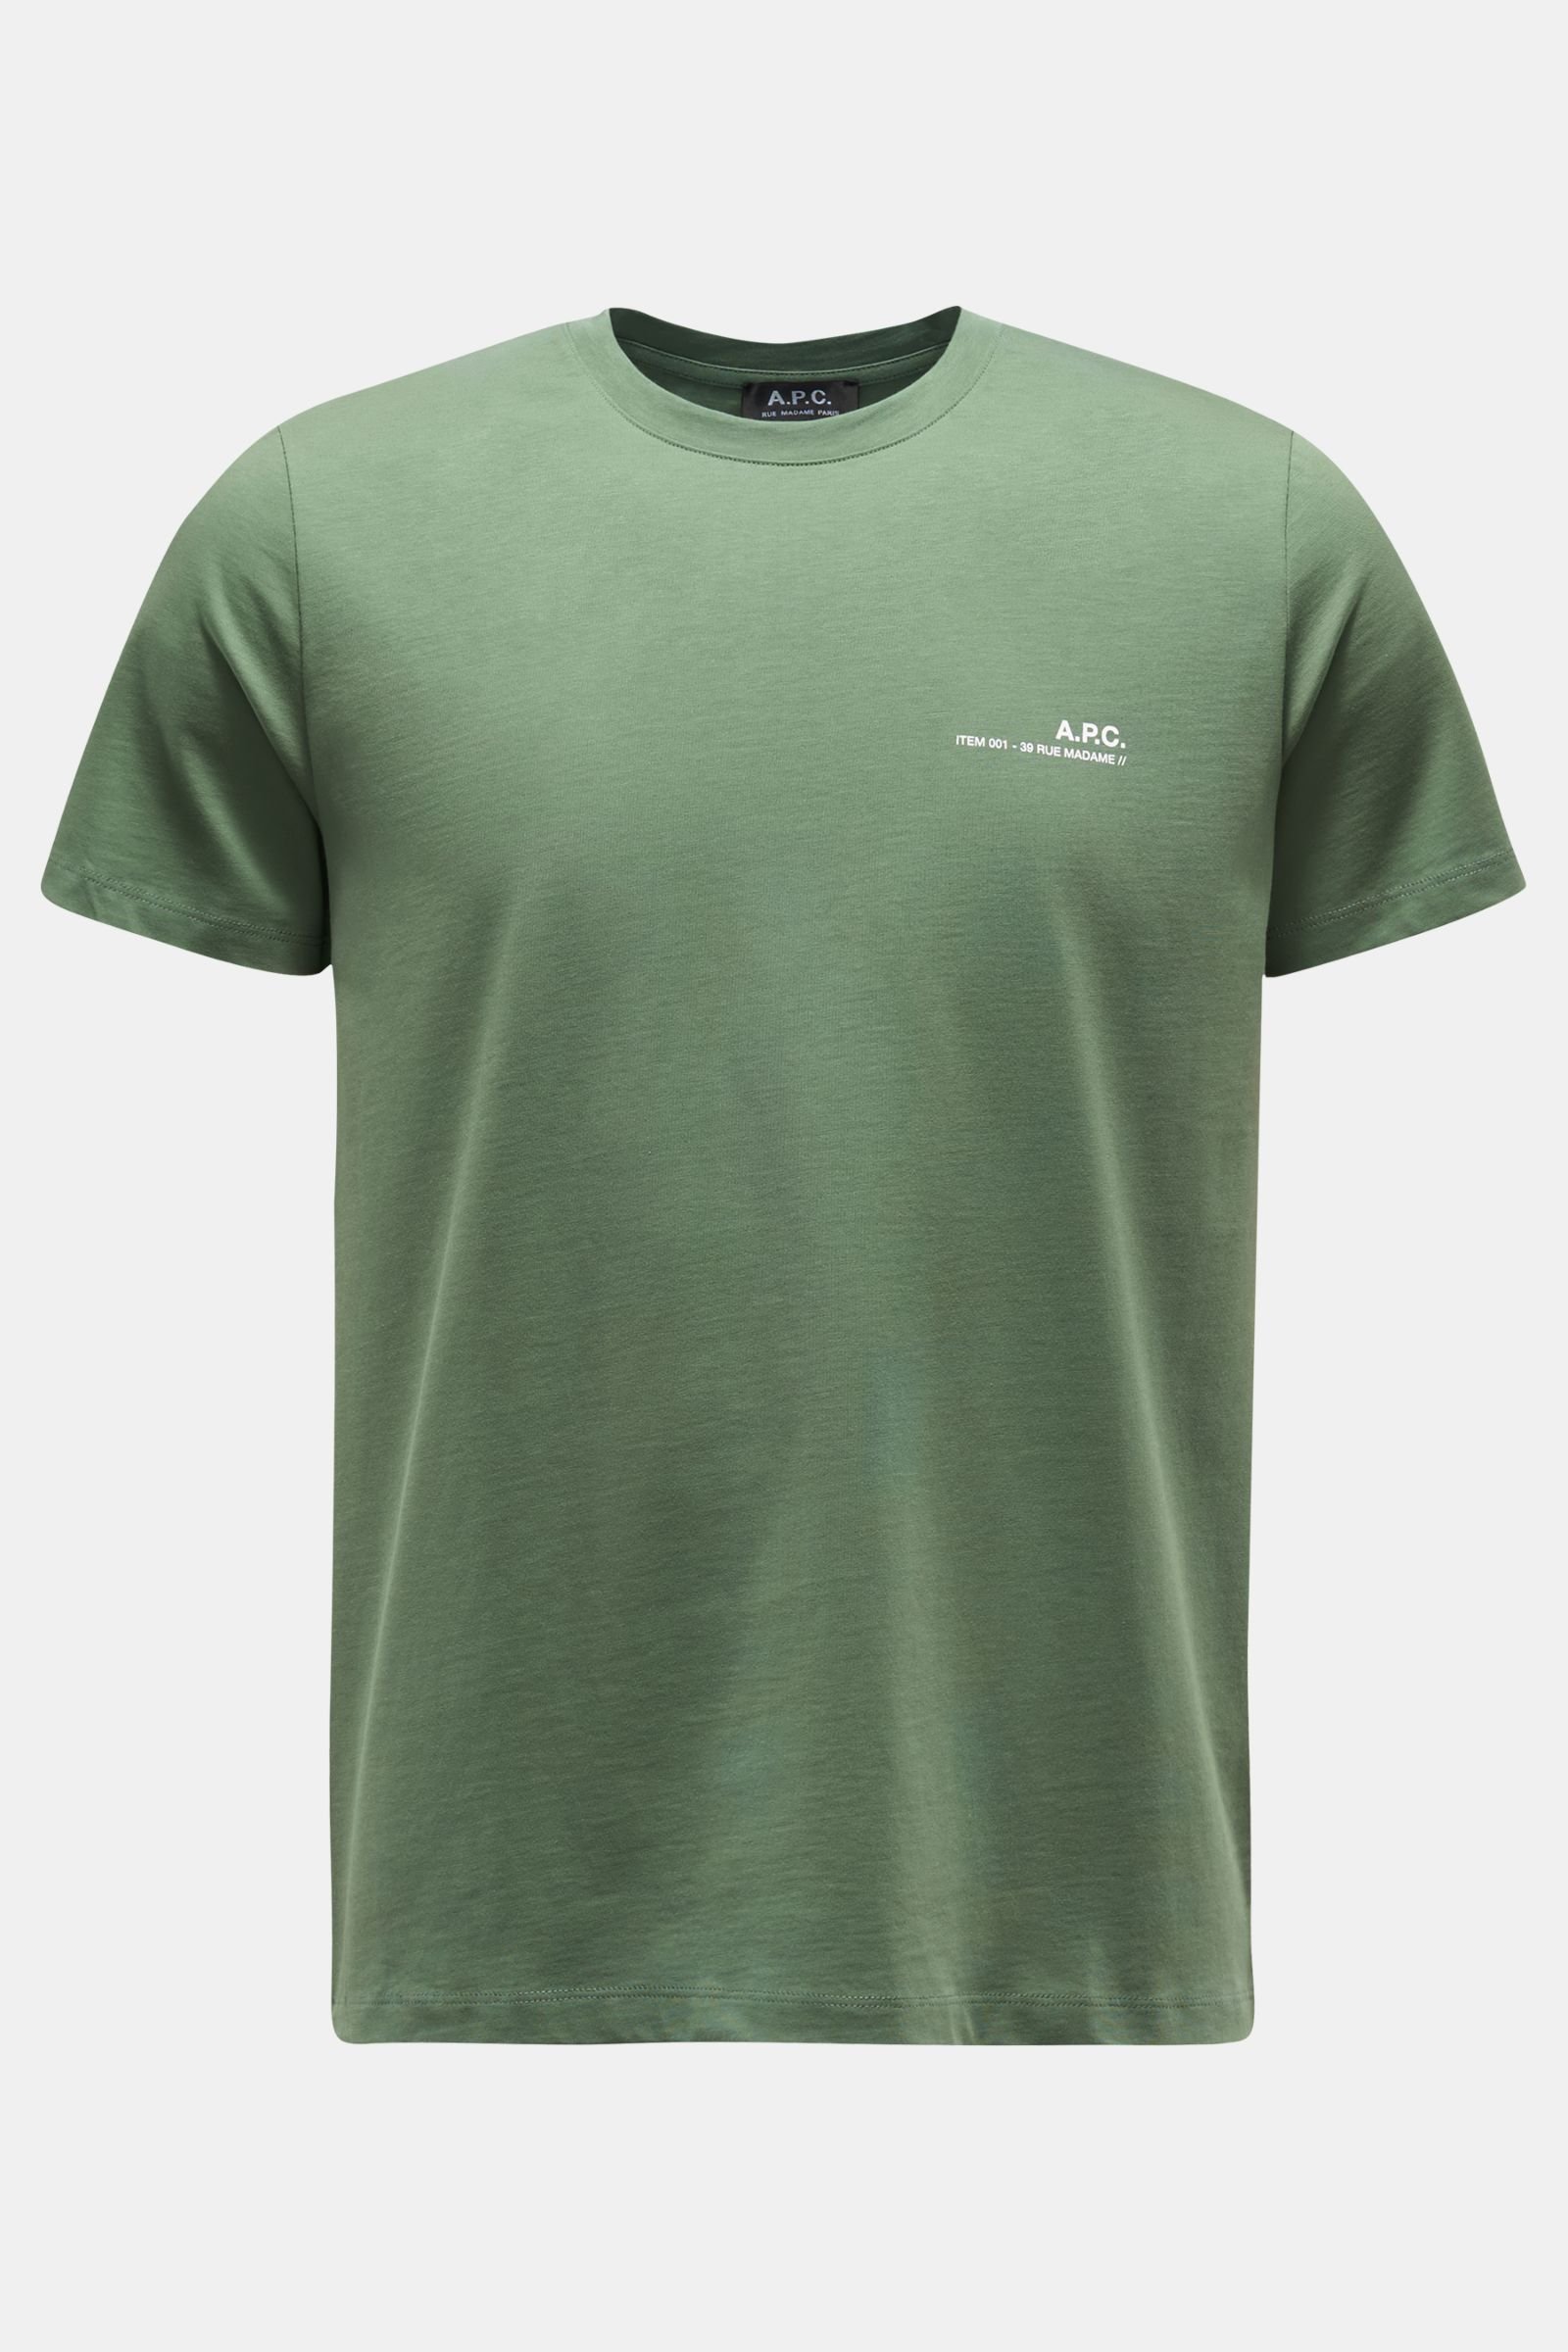 Rundhals-T-Shirt 'Item' graugrün